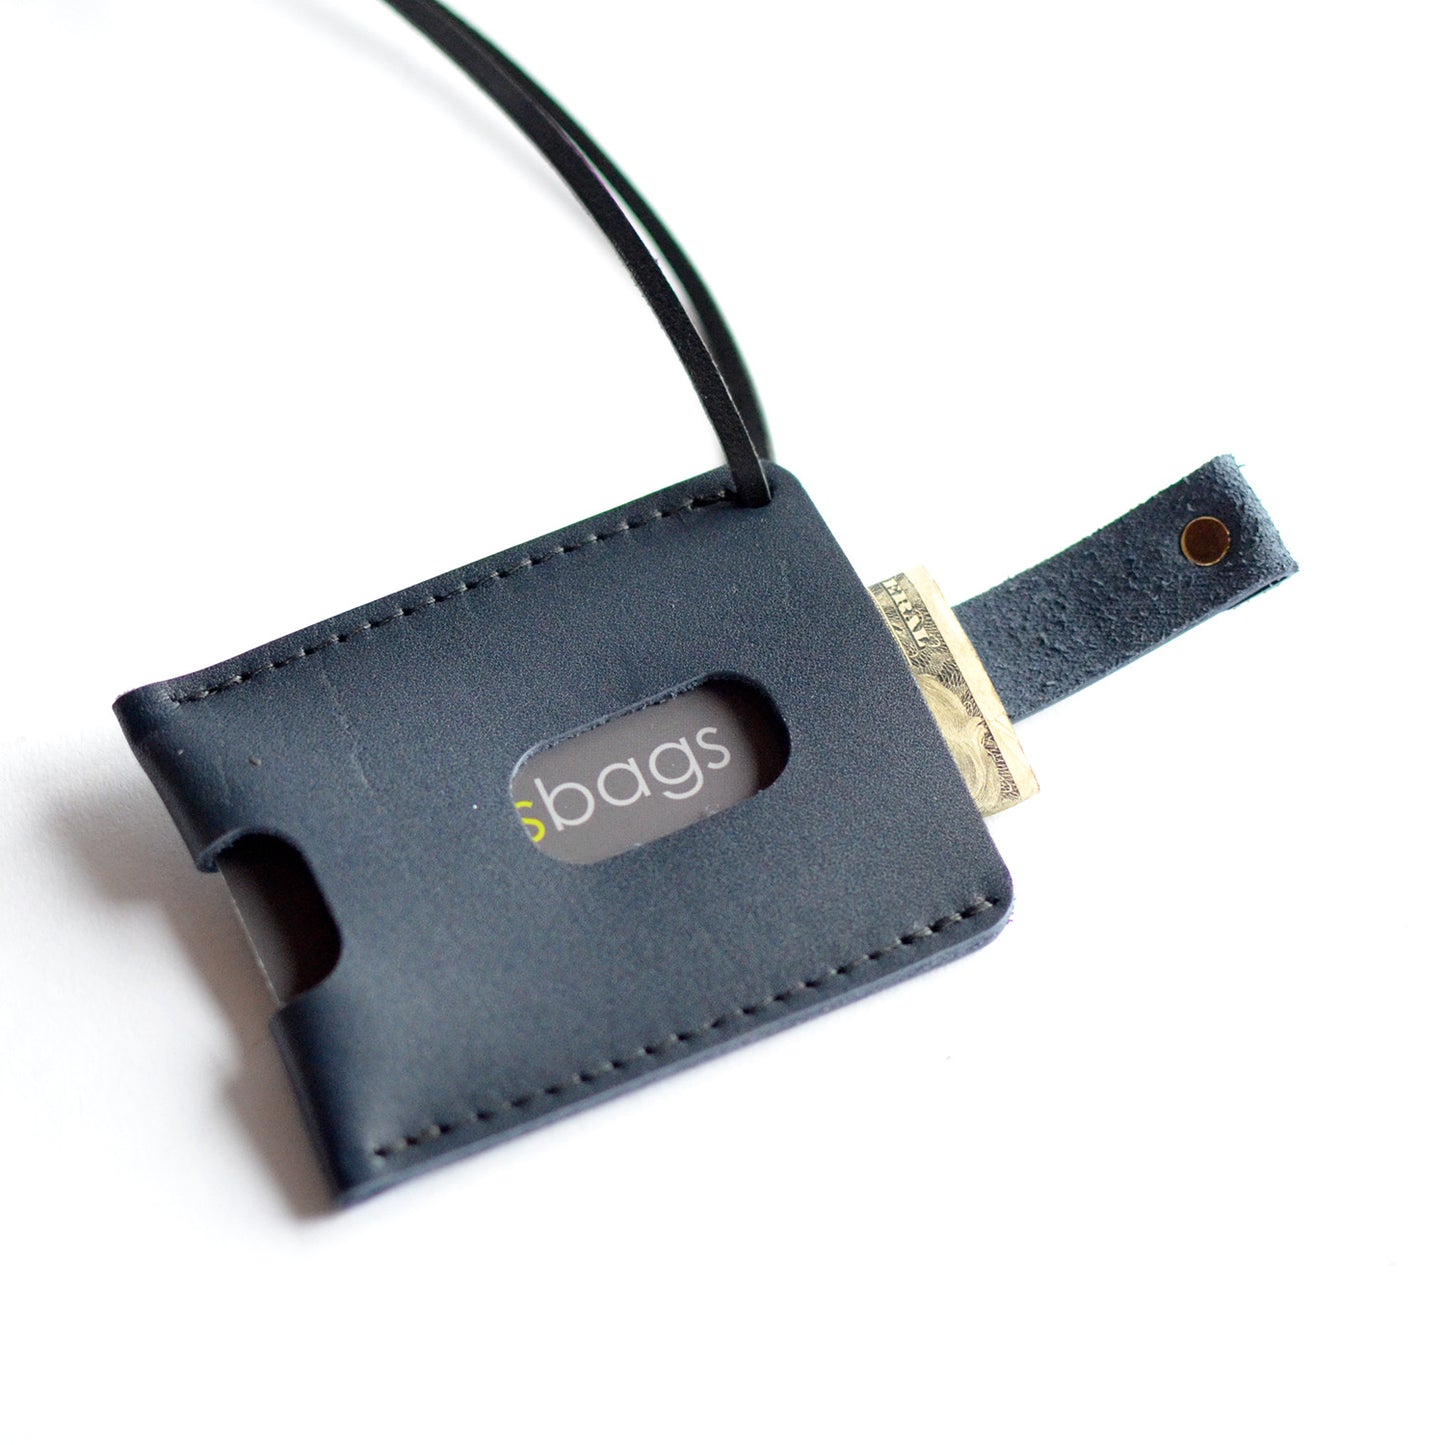 Minimalist Wallet - Brown Leather